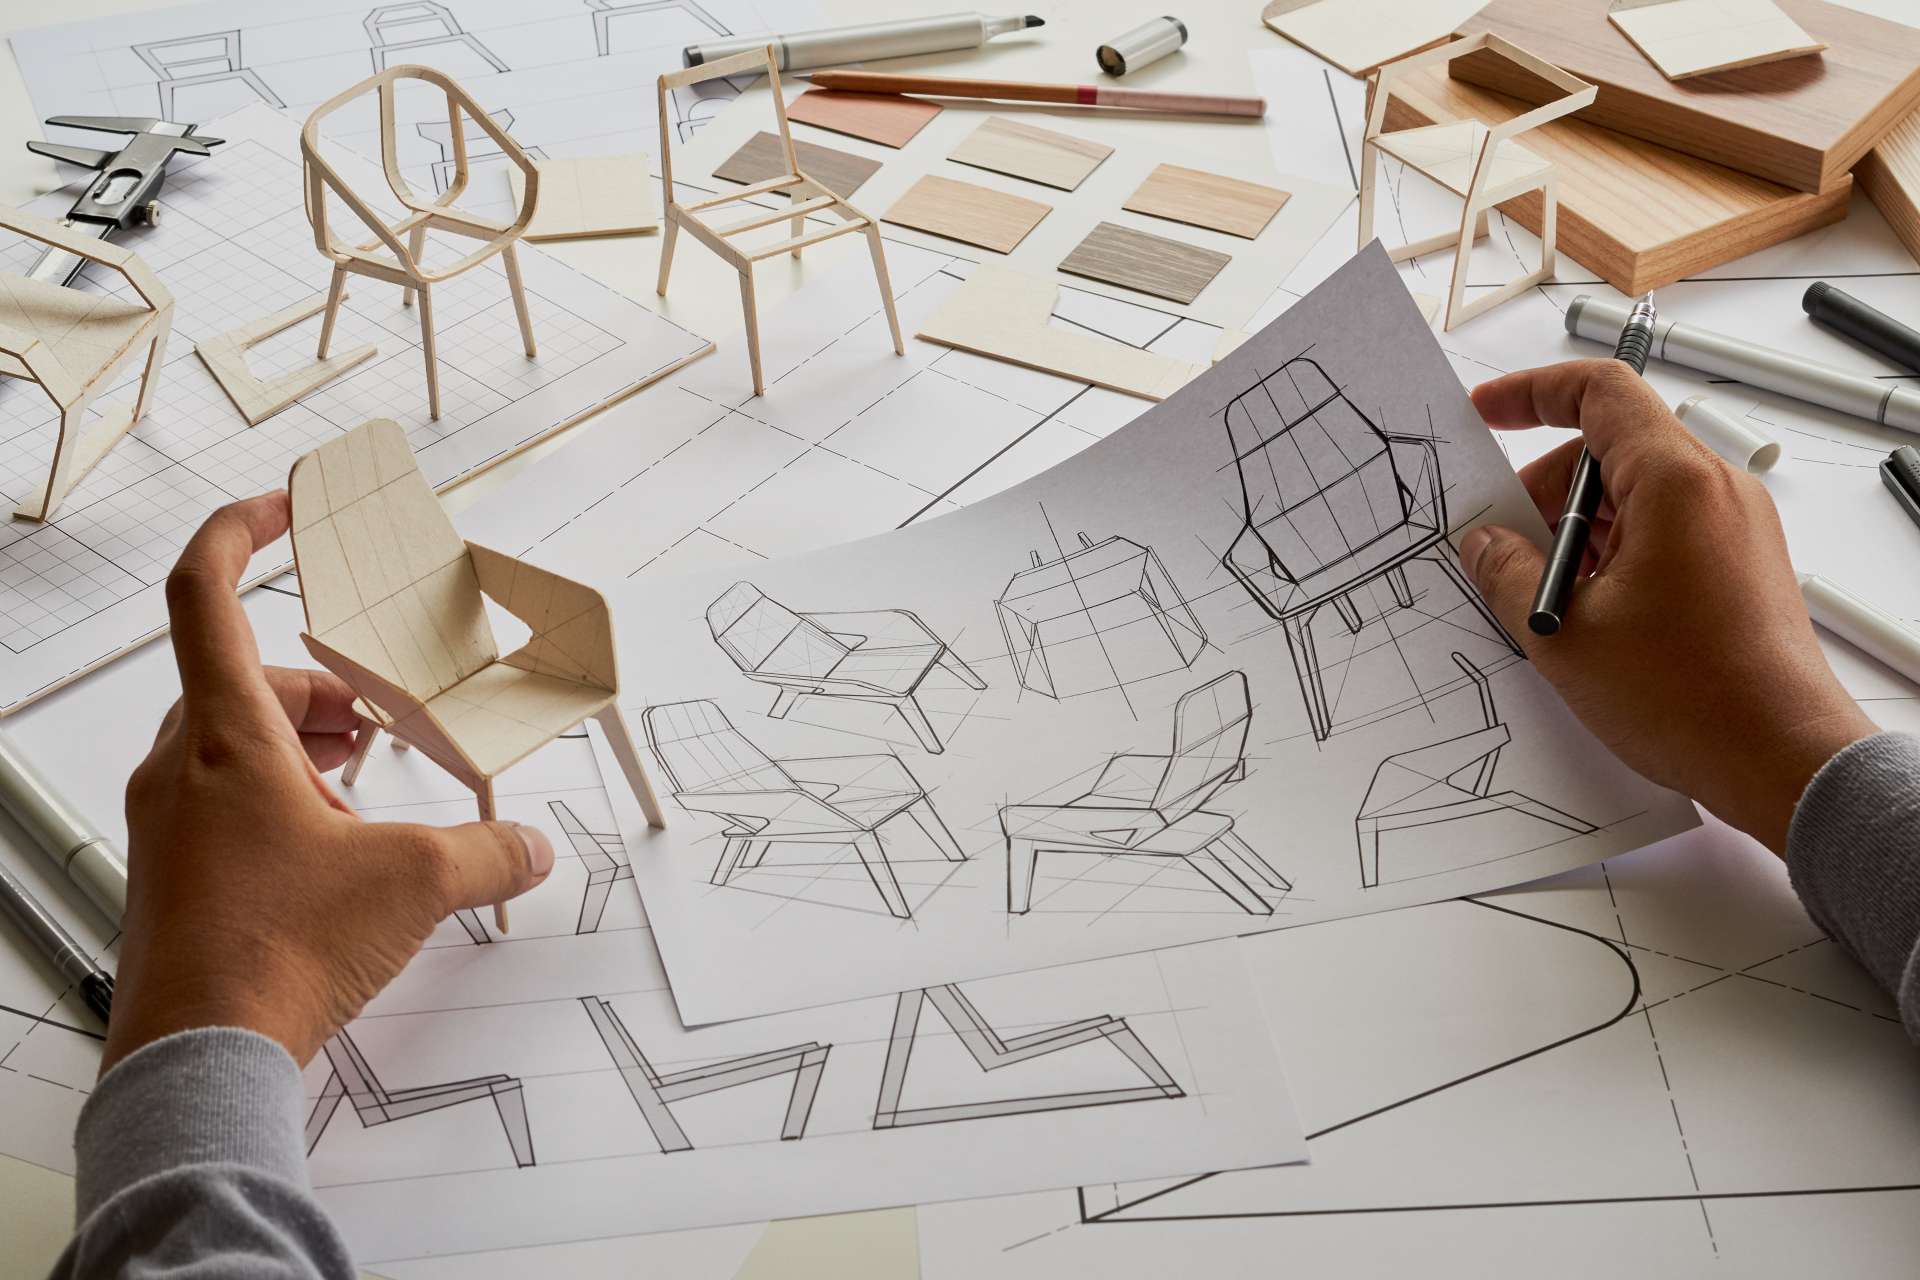 designer sketching drawing design development product plan draft chair armchair wingback interior furniture prototype manufacturing production. designer studio concept .